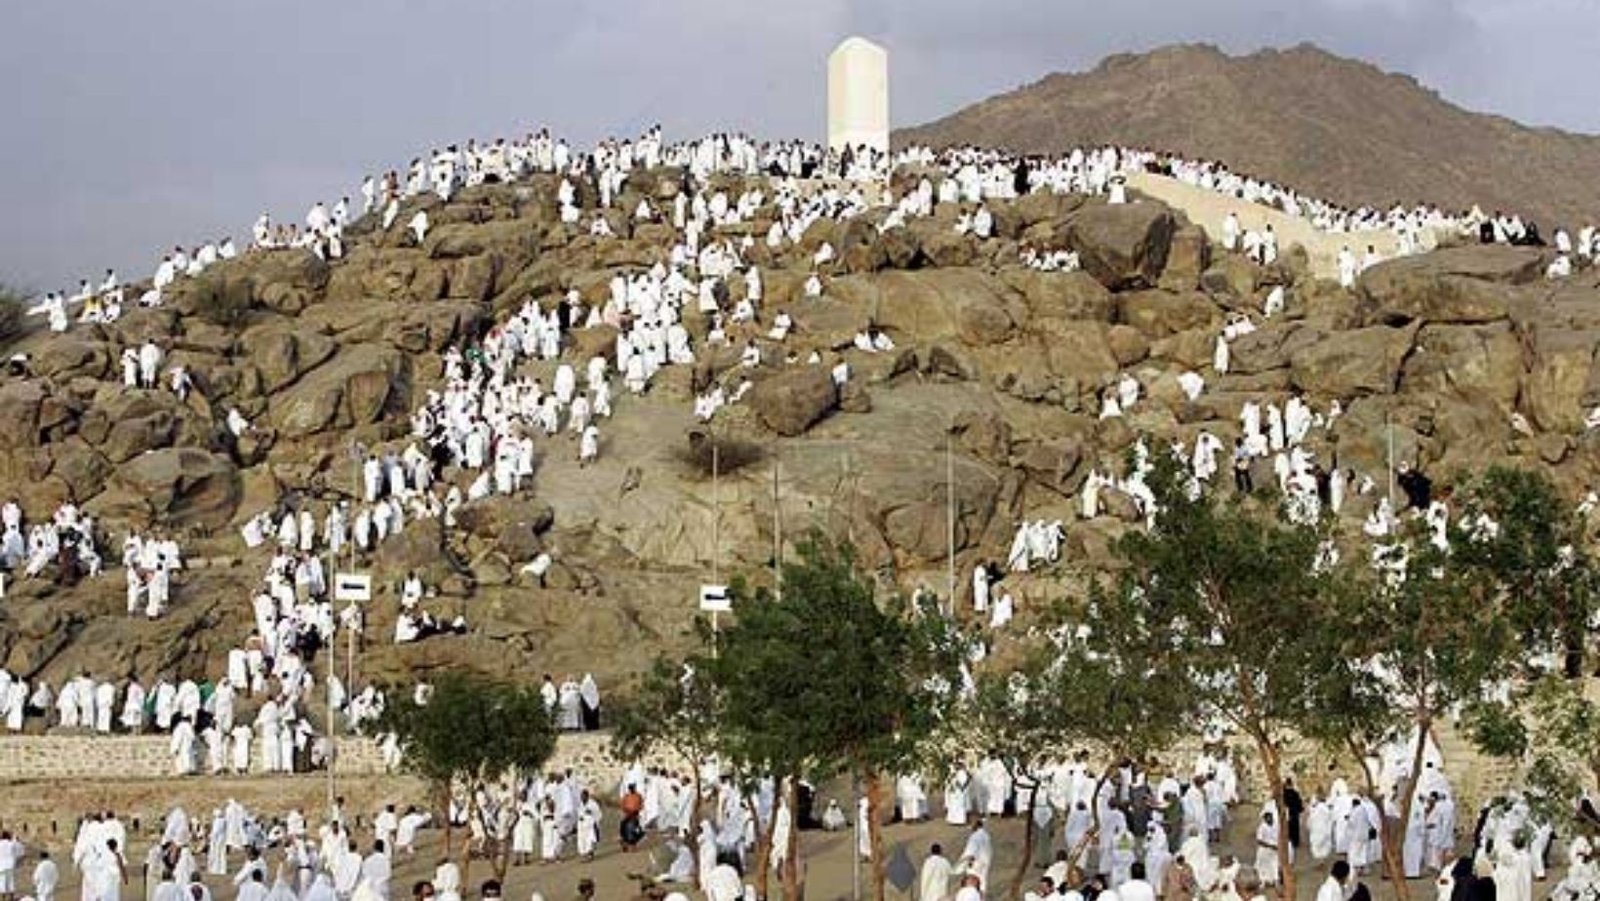 Pilgrims swarm Mount Arafat in the largest post-restriction Hajj